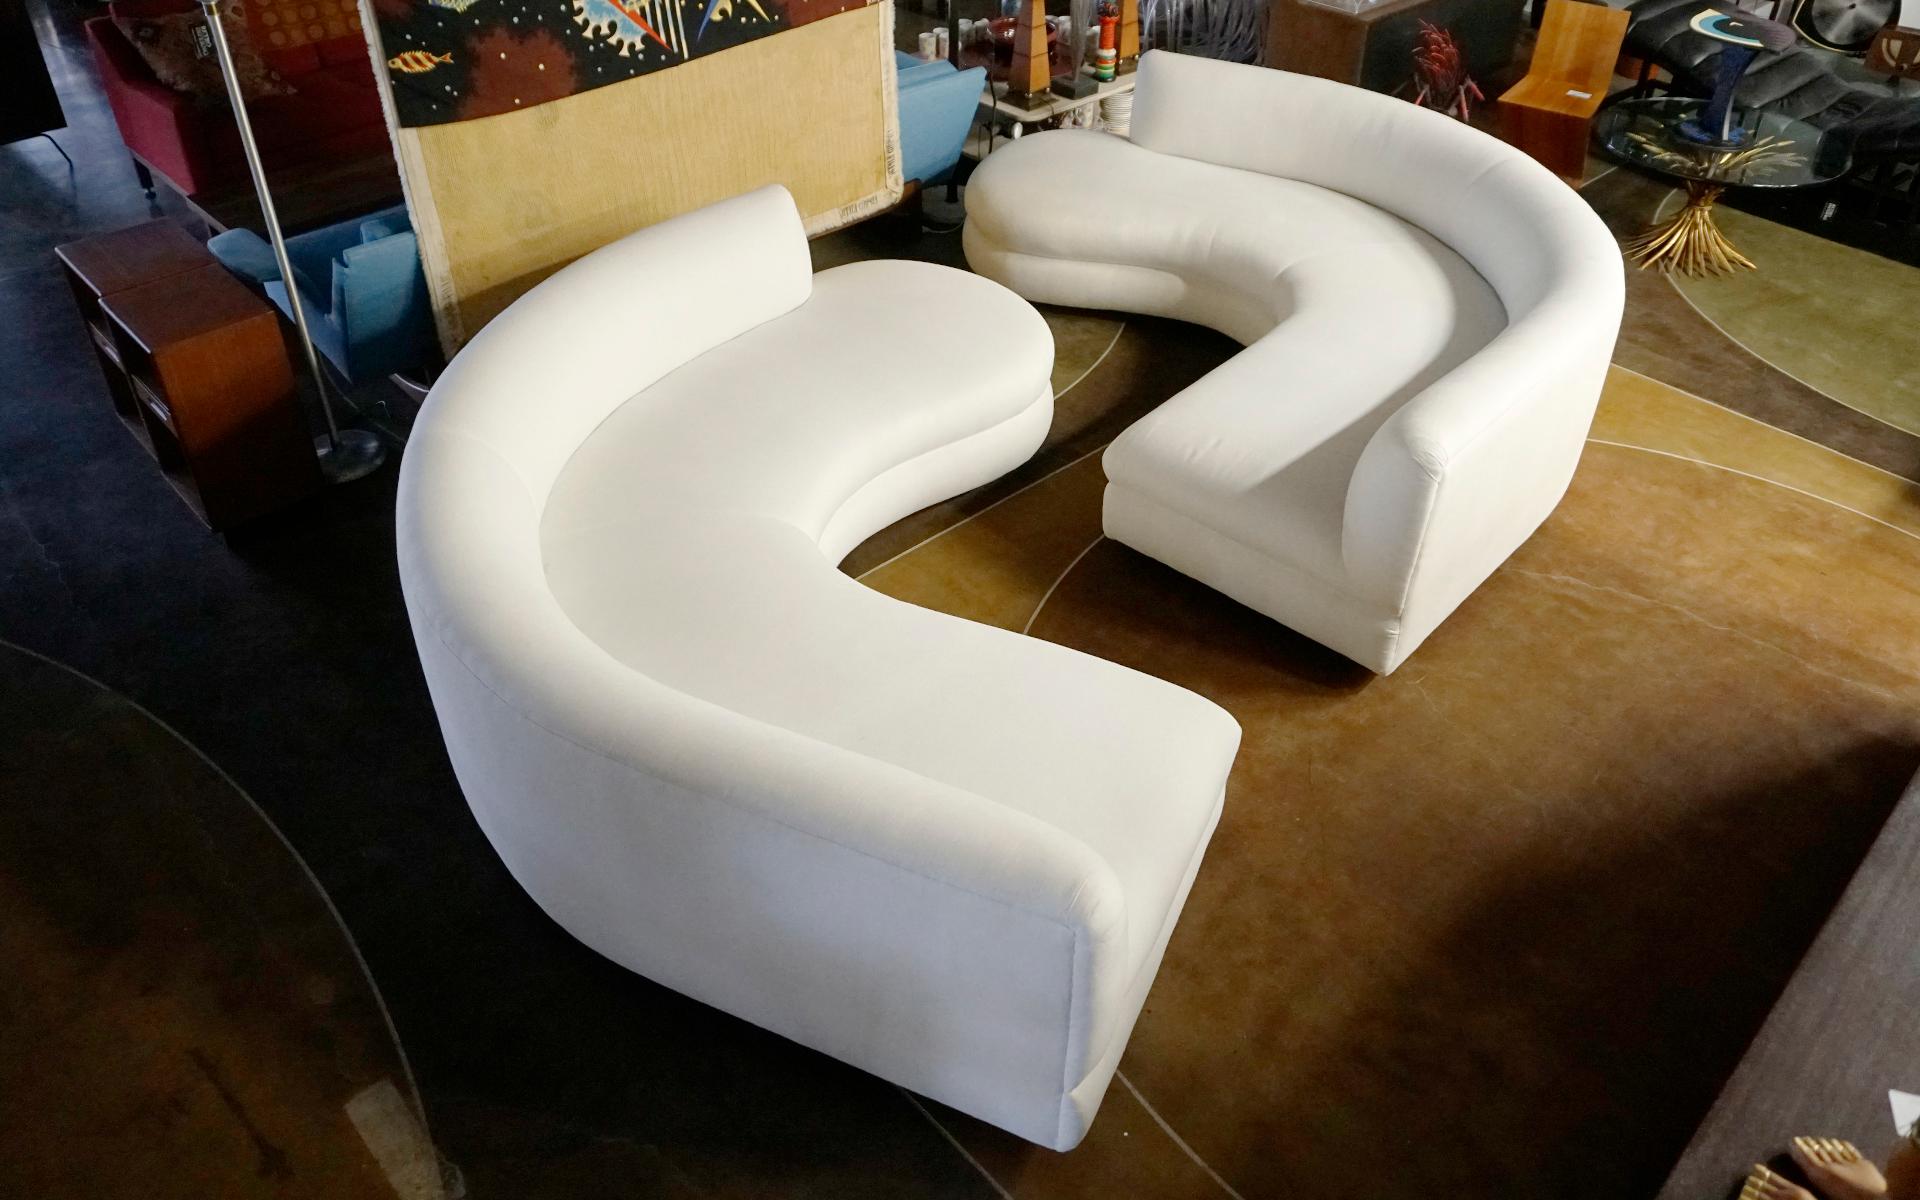 American Large U shape Sectional Sofa in the Style of Vladimir Kagan's Cloud Sofa Designs